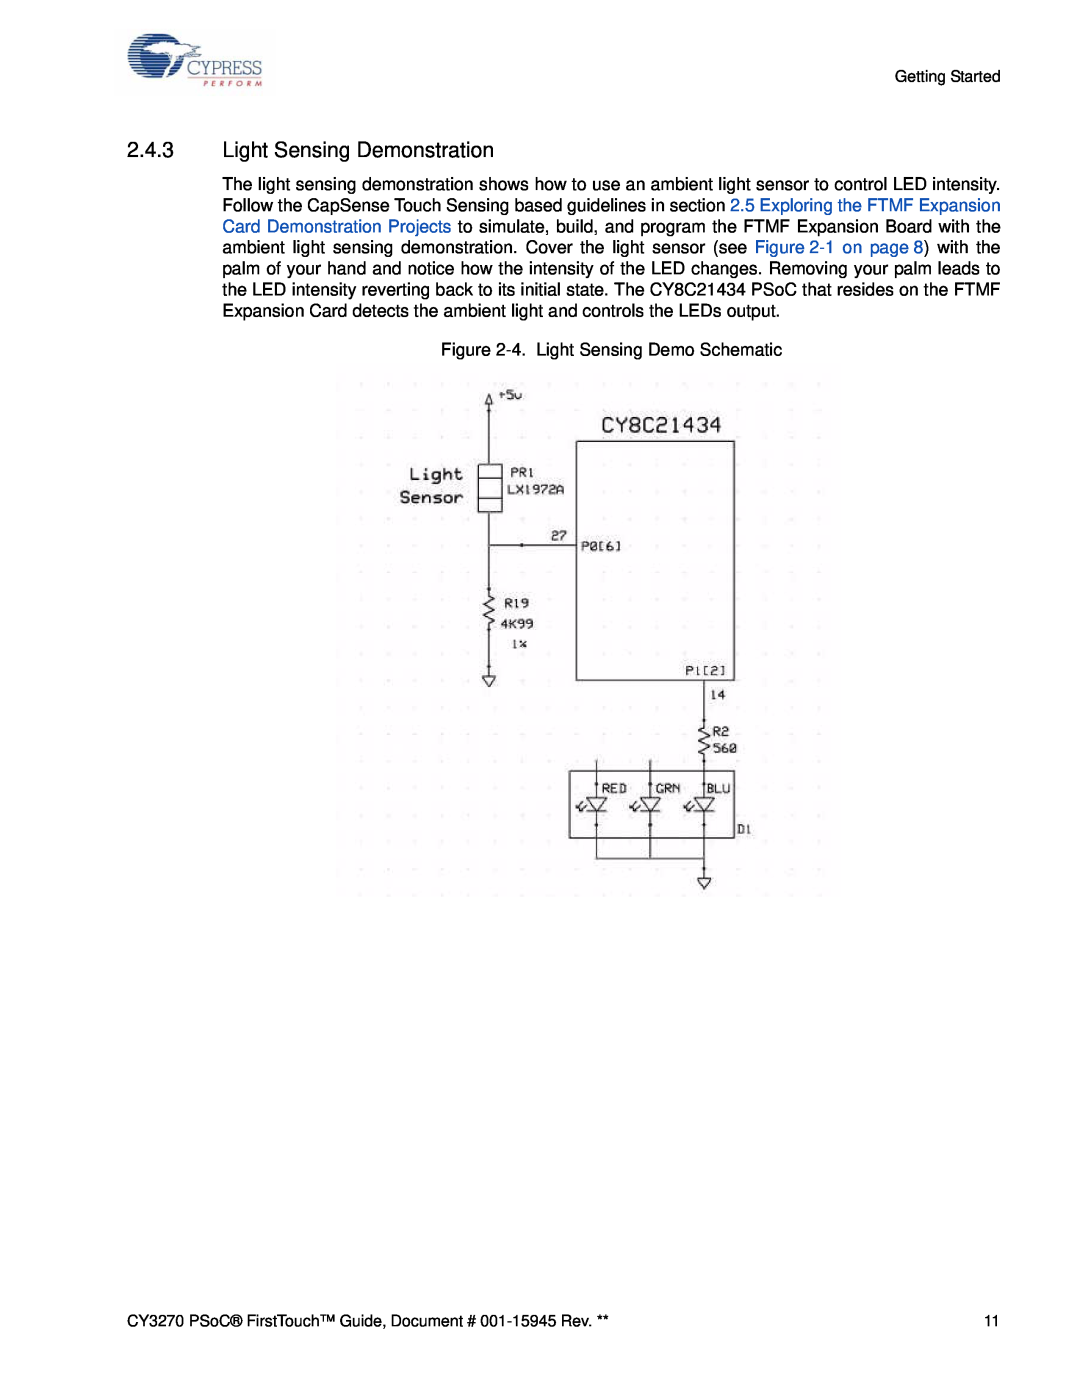 Cypress CY3270 manual Light Sensing Demonstration 